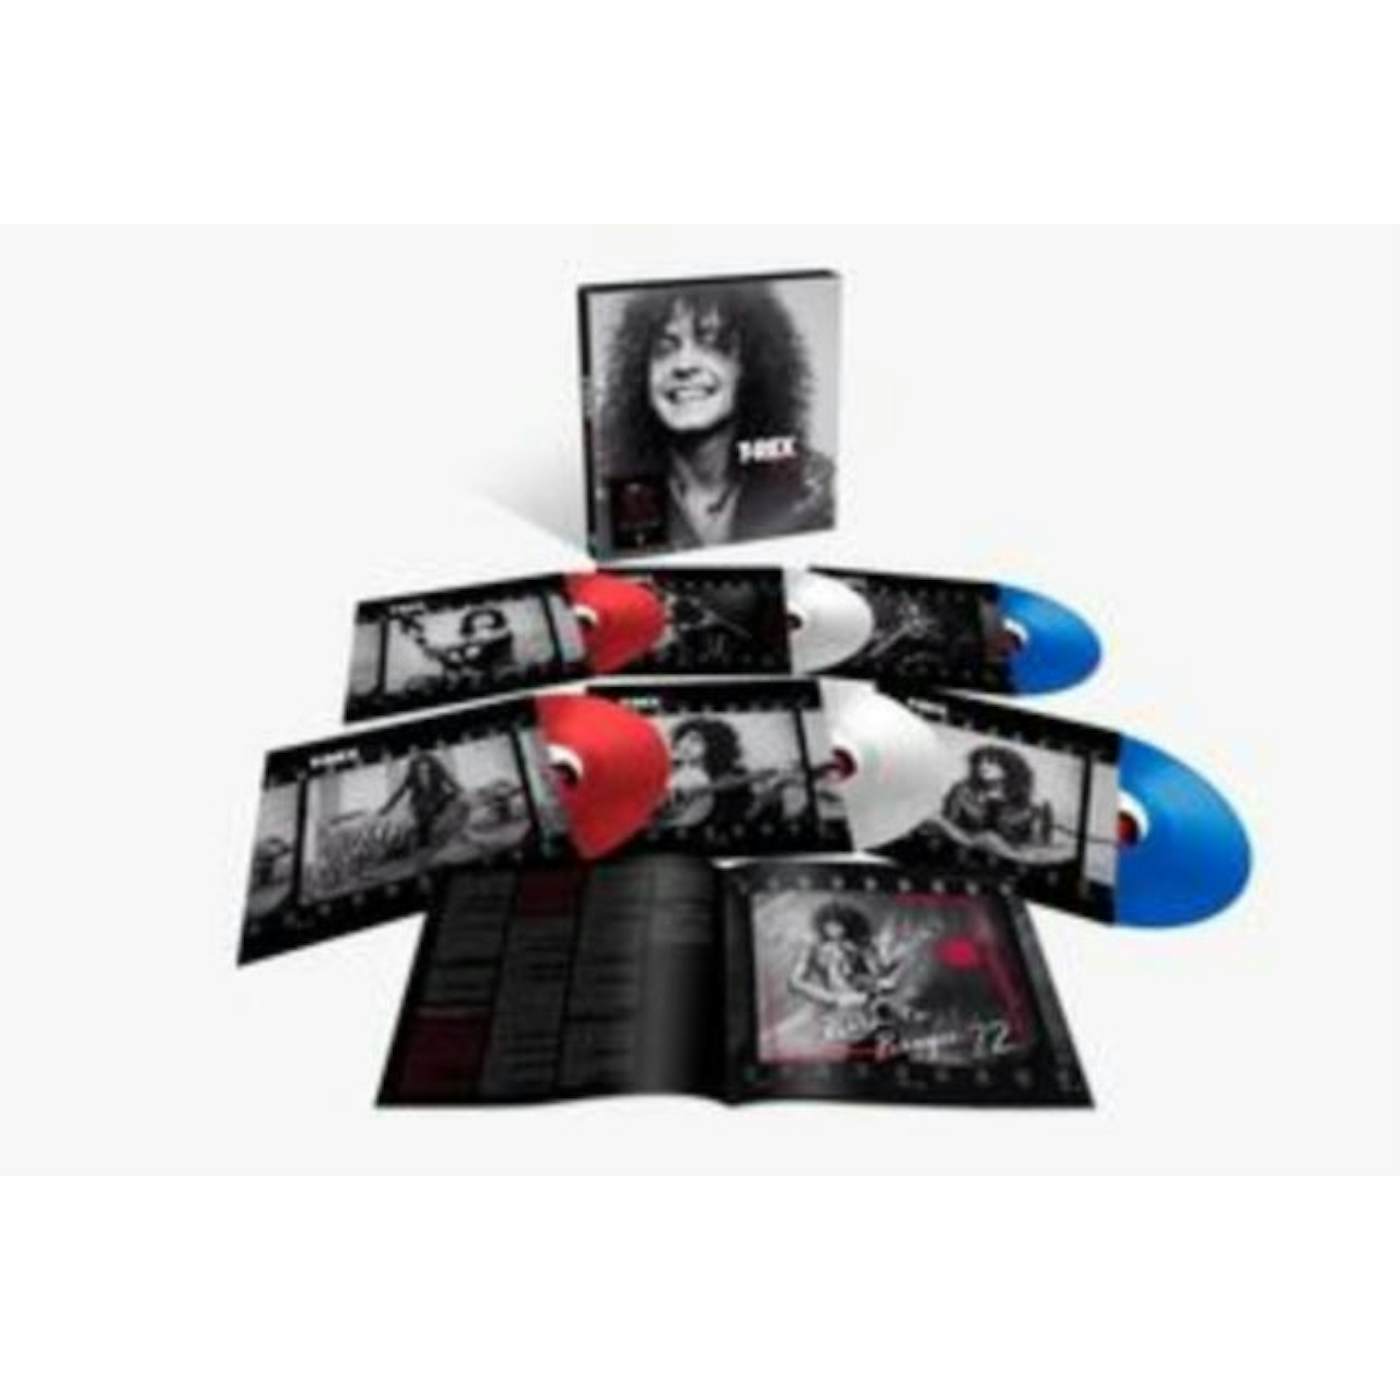 T. Rex LP Vinyl Record - 19 72 (Red/White/Blue Vinyl)